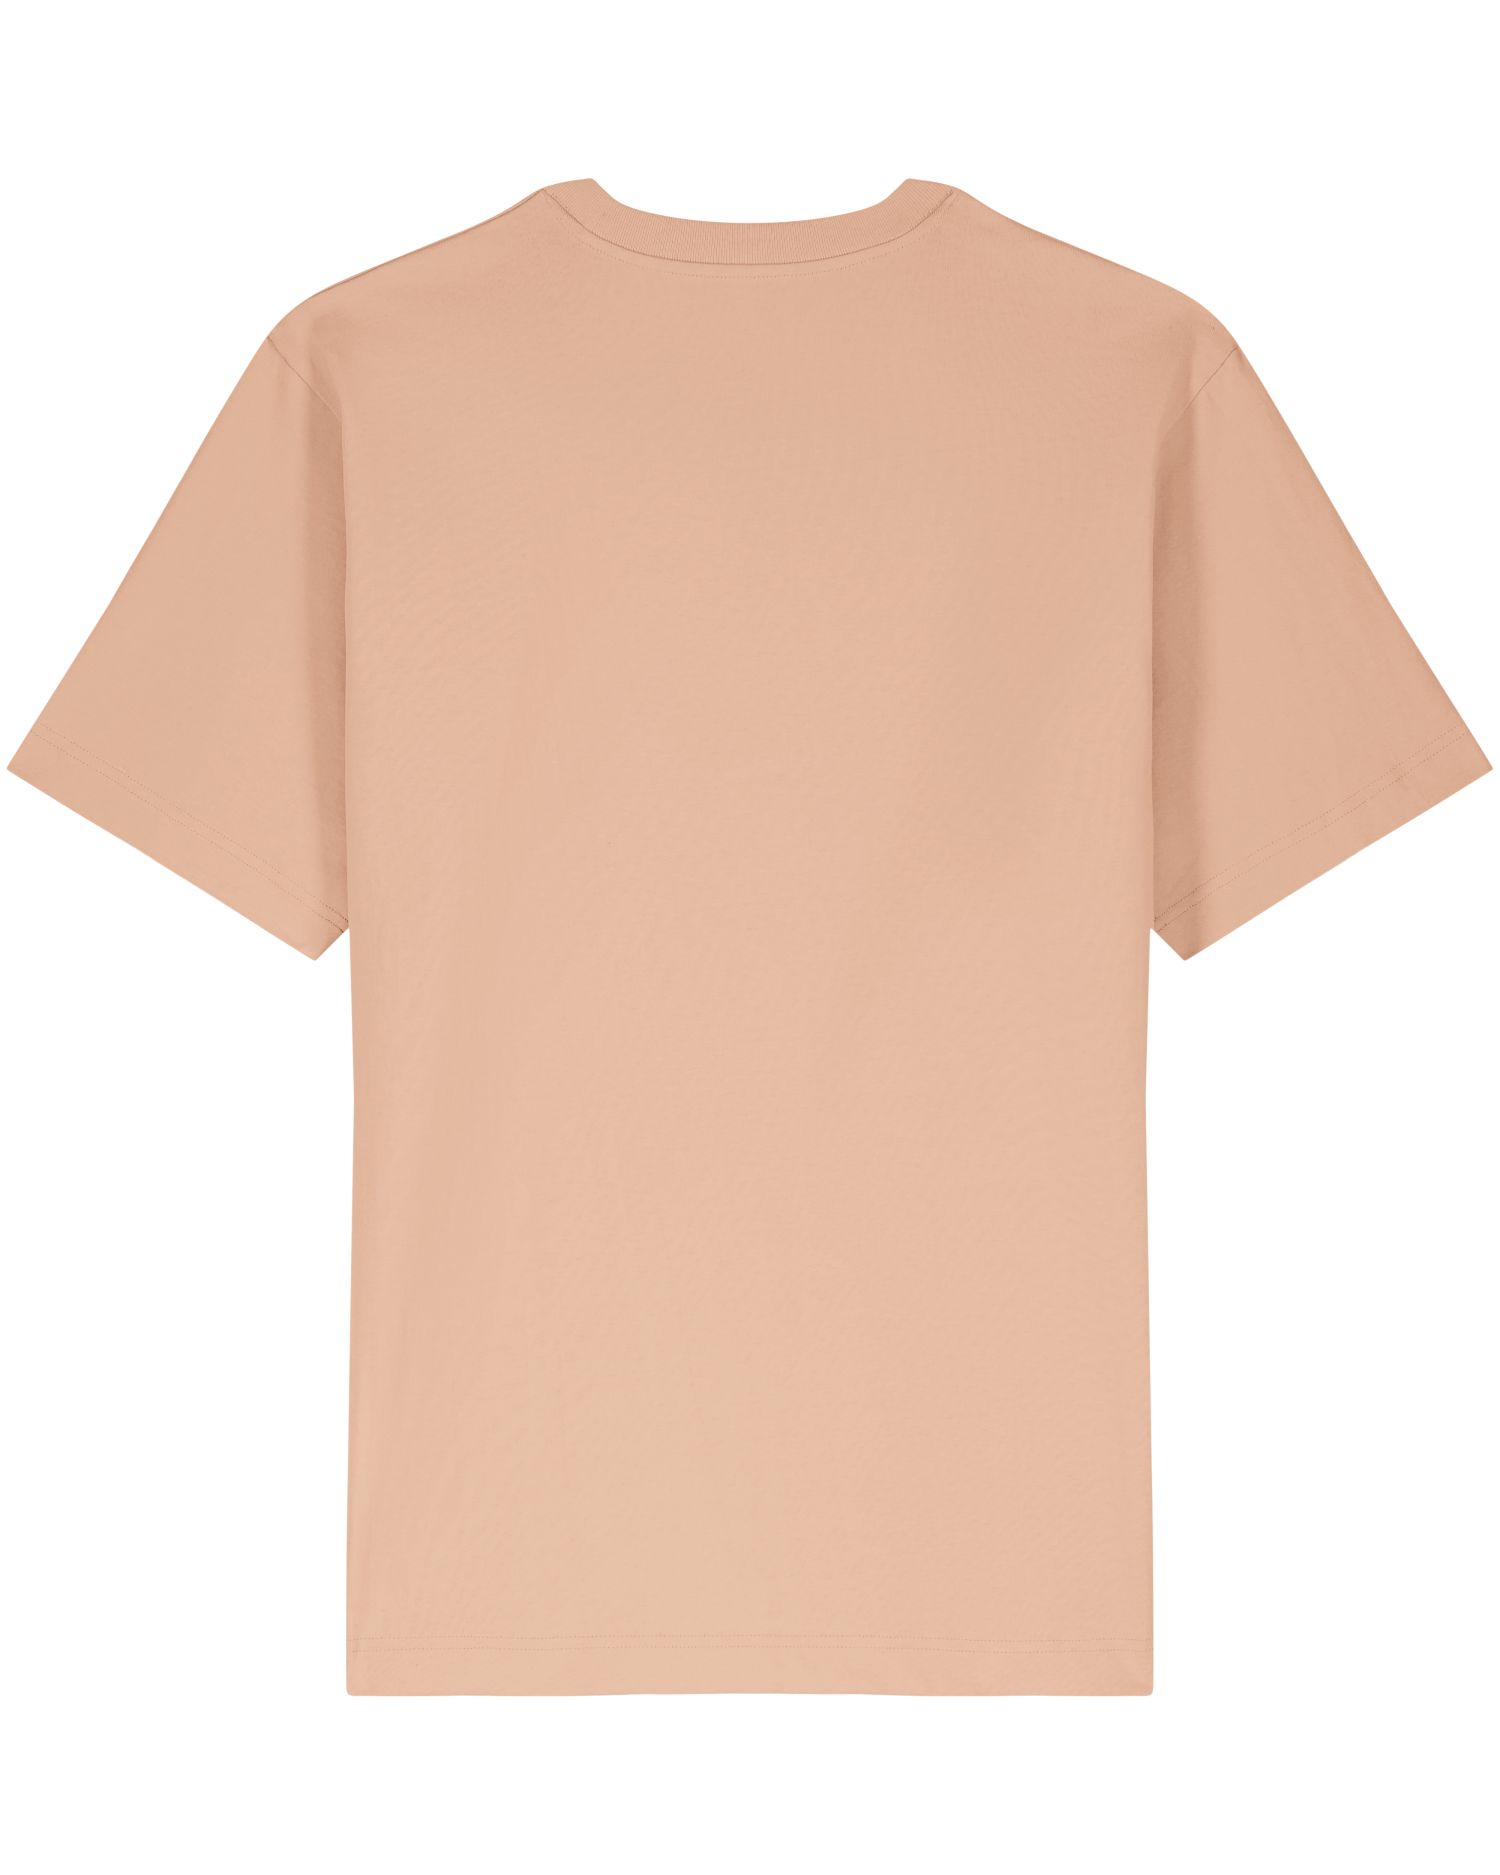 T-Shirt Freestyler in Farbe Fraiche Peche